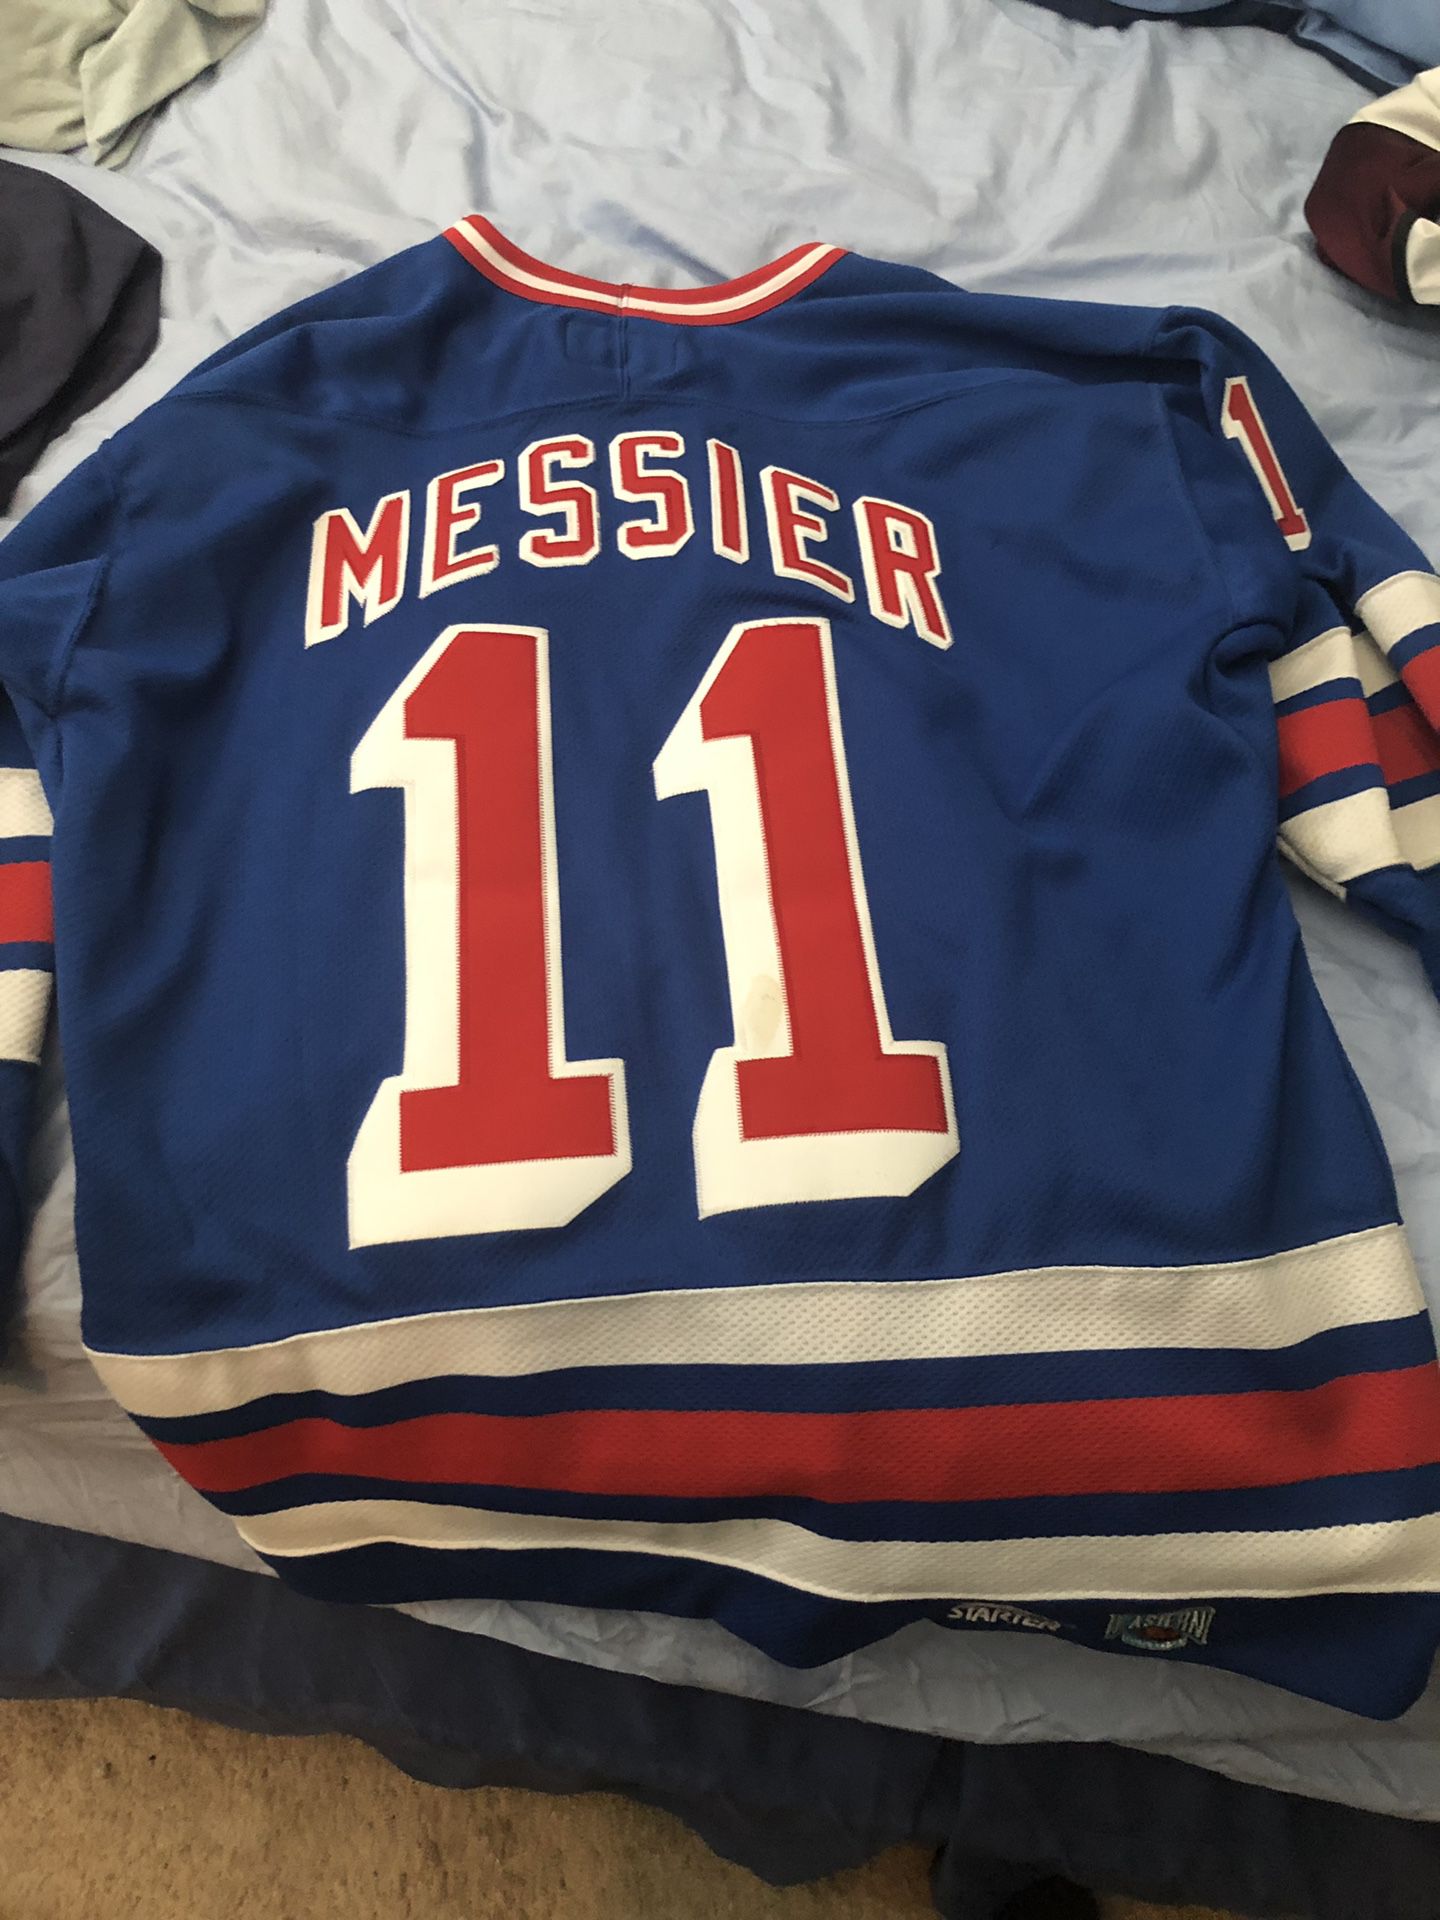 Mark Messier hockey jersey